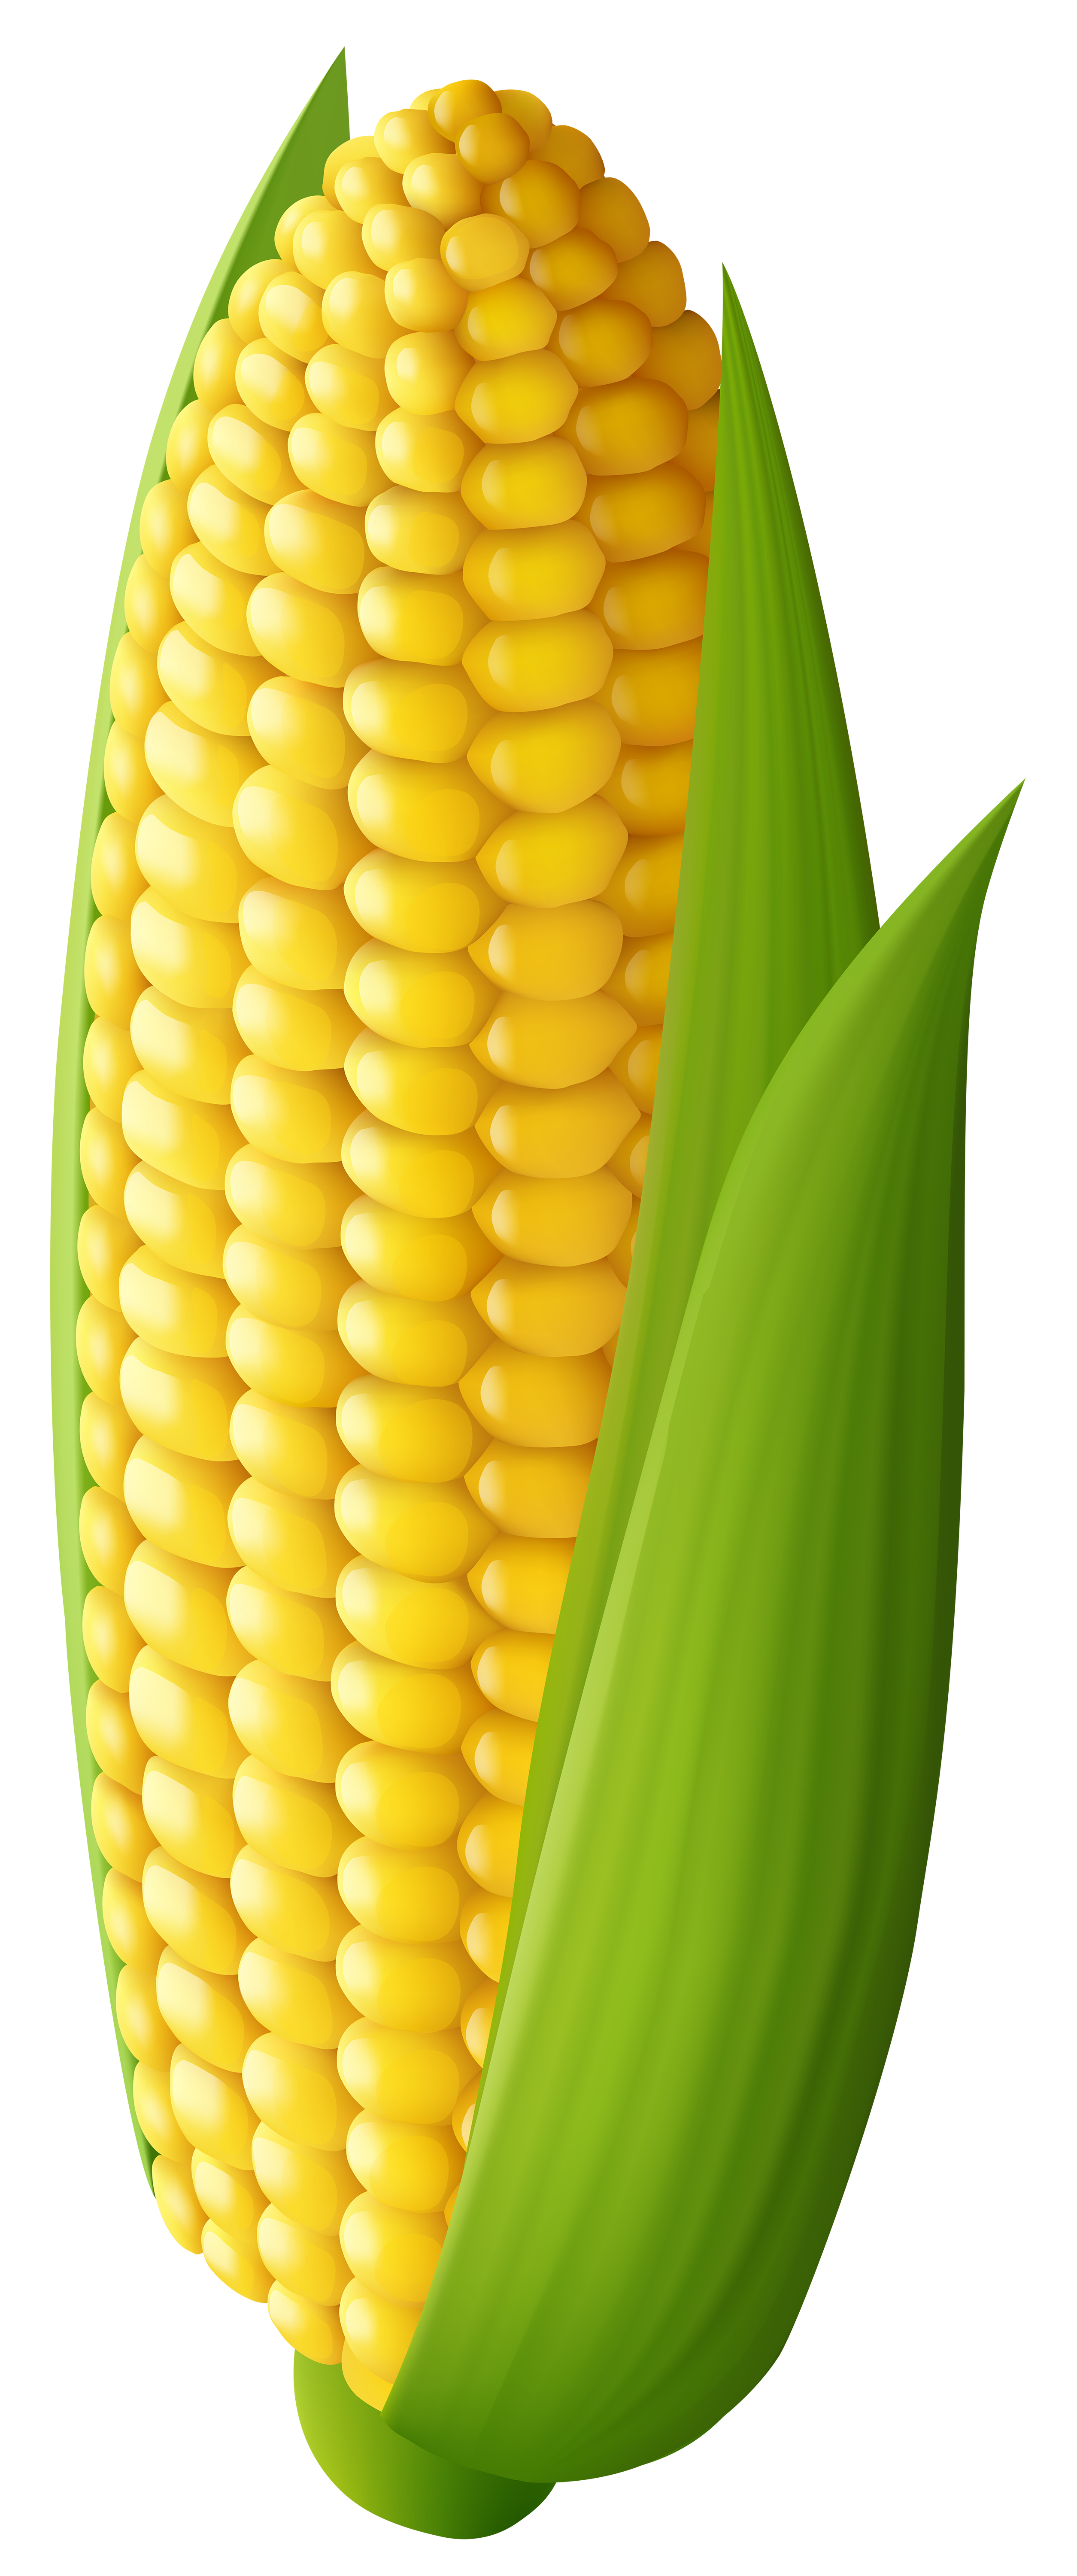 Corn transparent png image. Peas clipart clip art